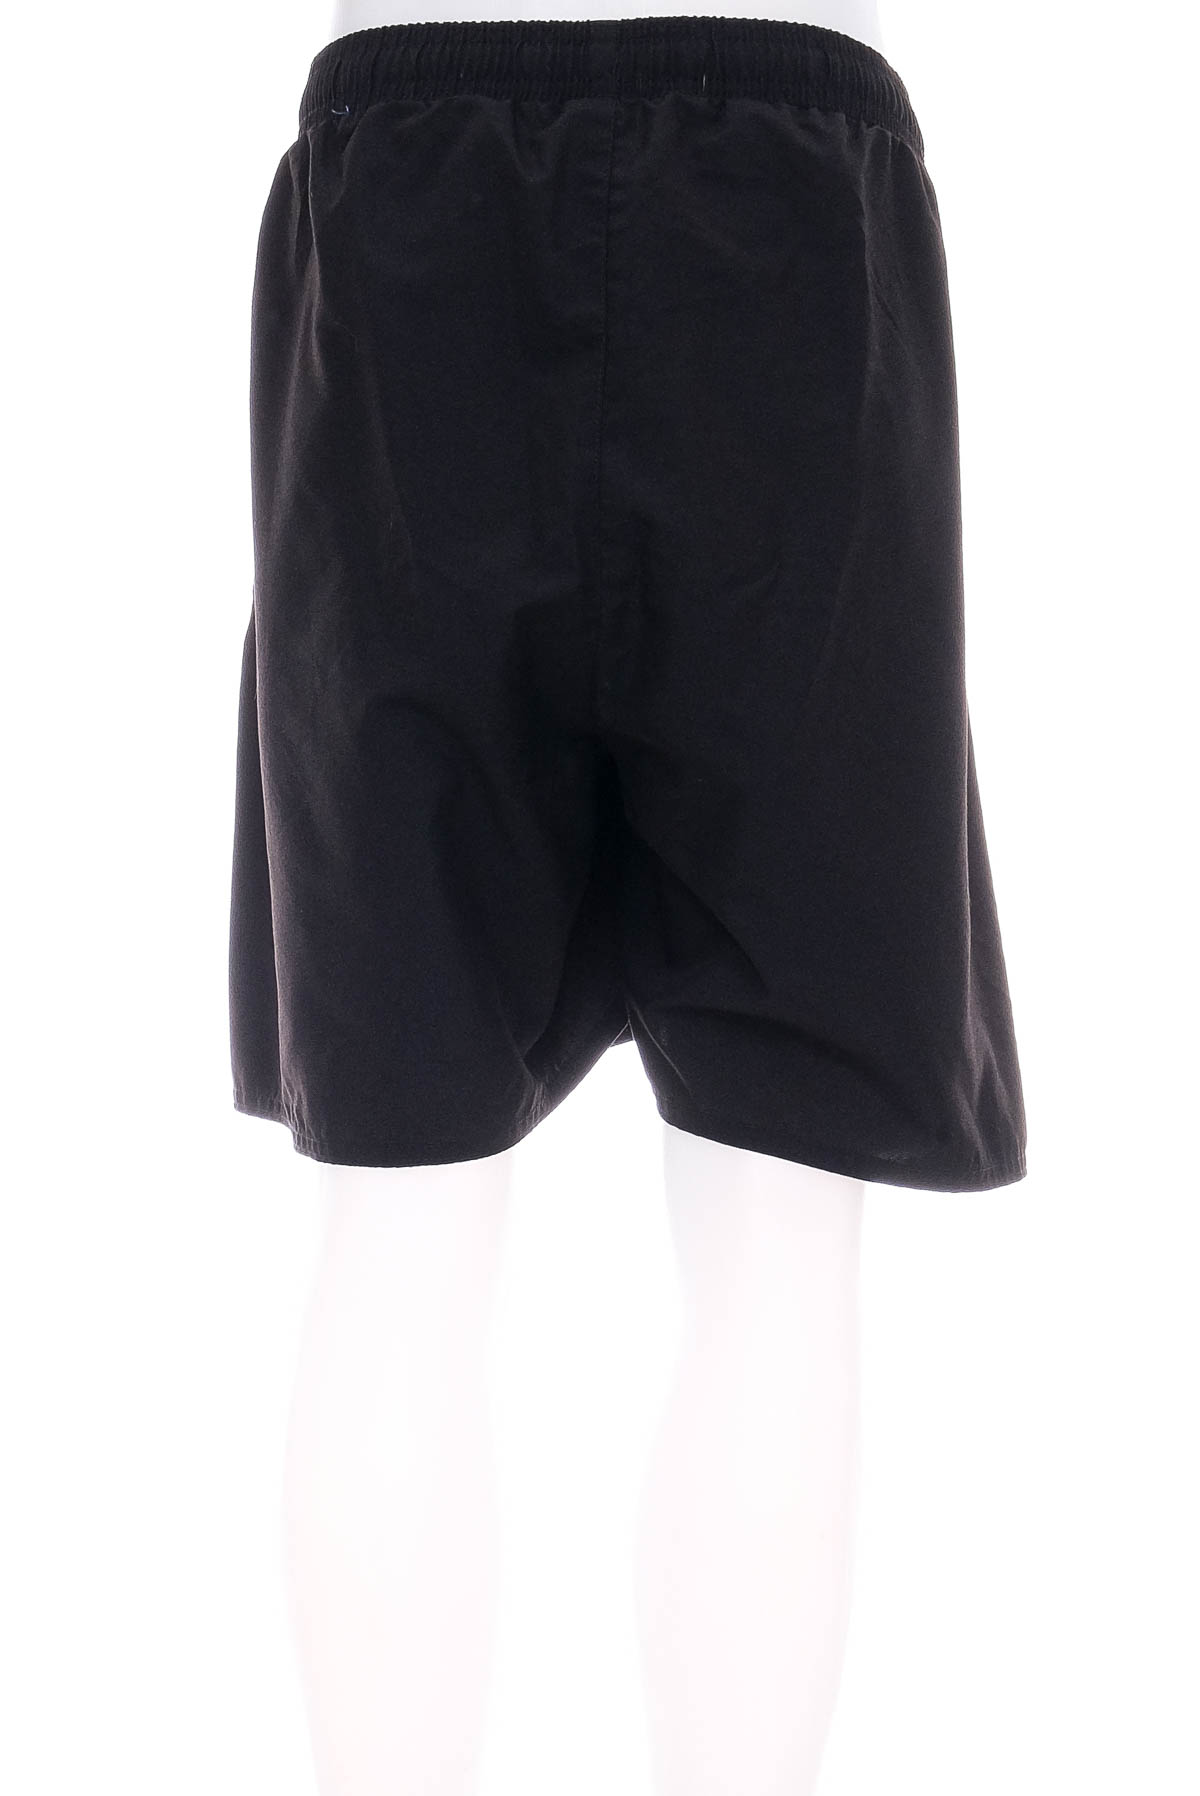 Men's shorts - DECATHLON - 1